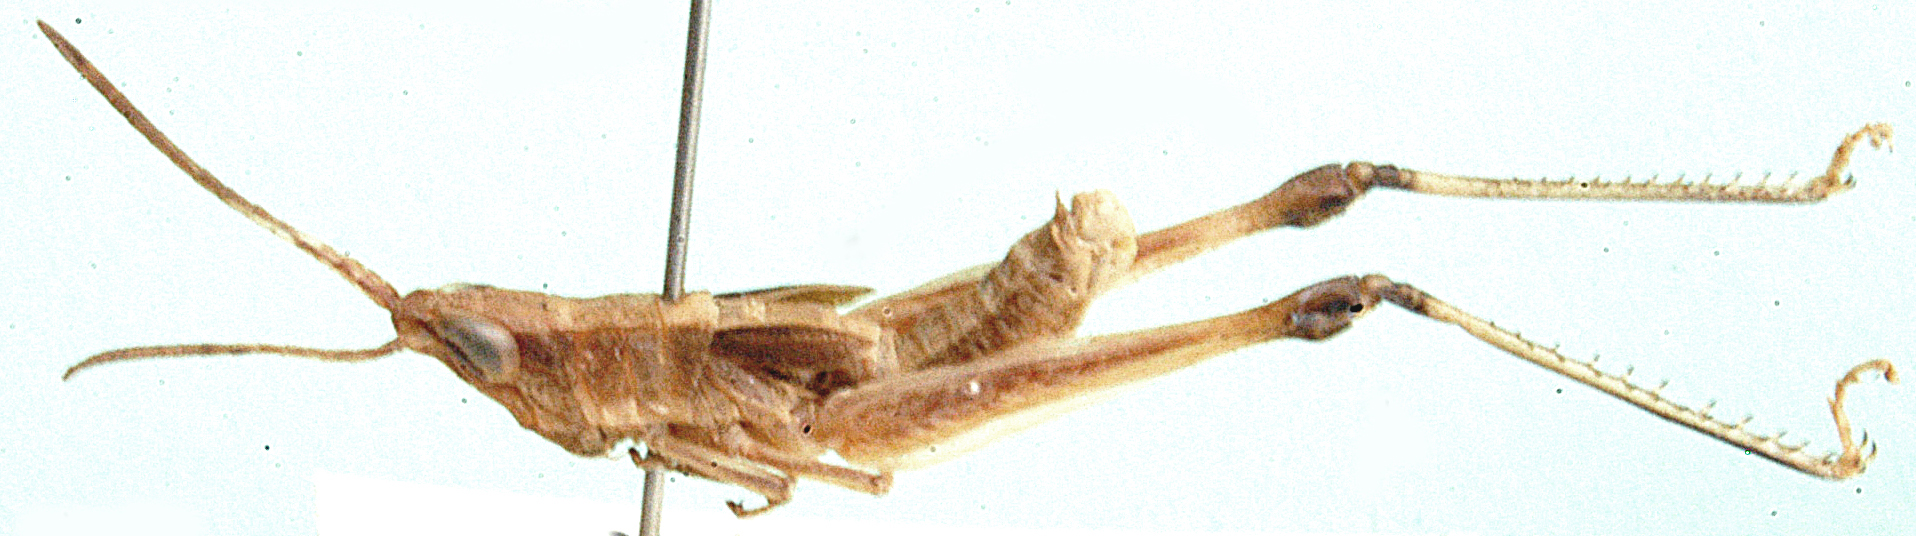 male, lateral view. Depicts Chokwea forchhammeri Johnsen, 1990, an Otu.